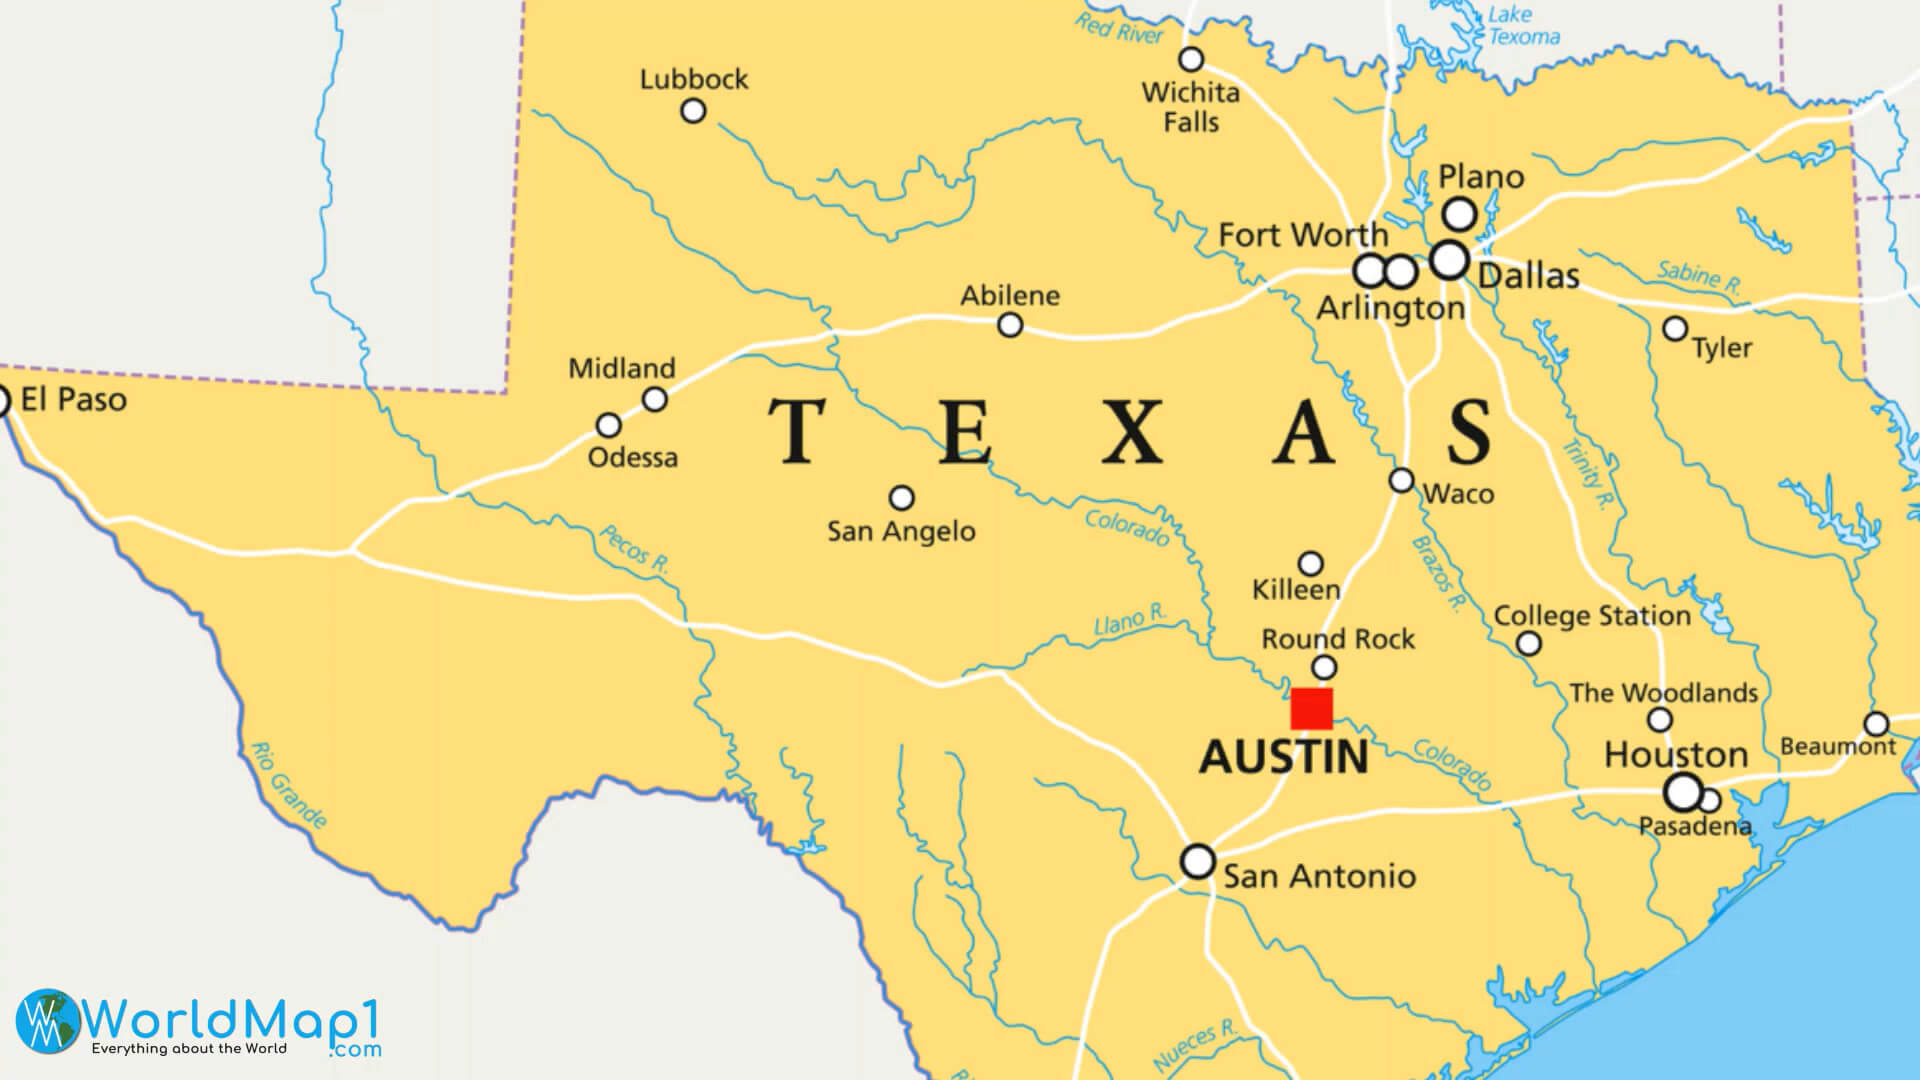 Texas Major Cities and Dams Map